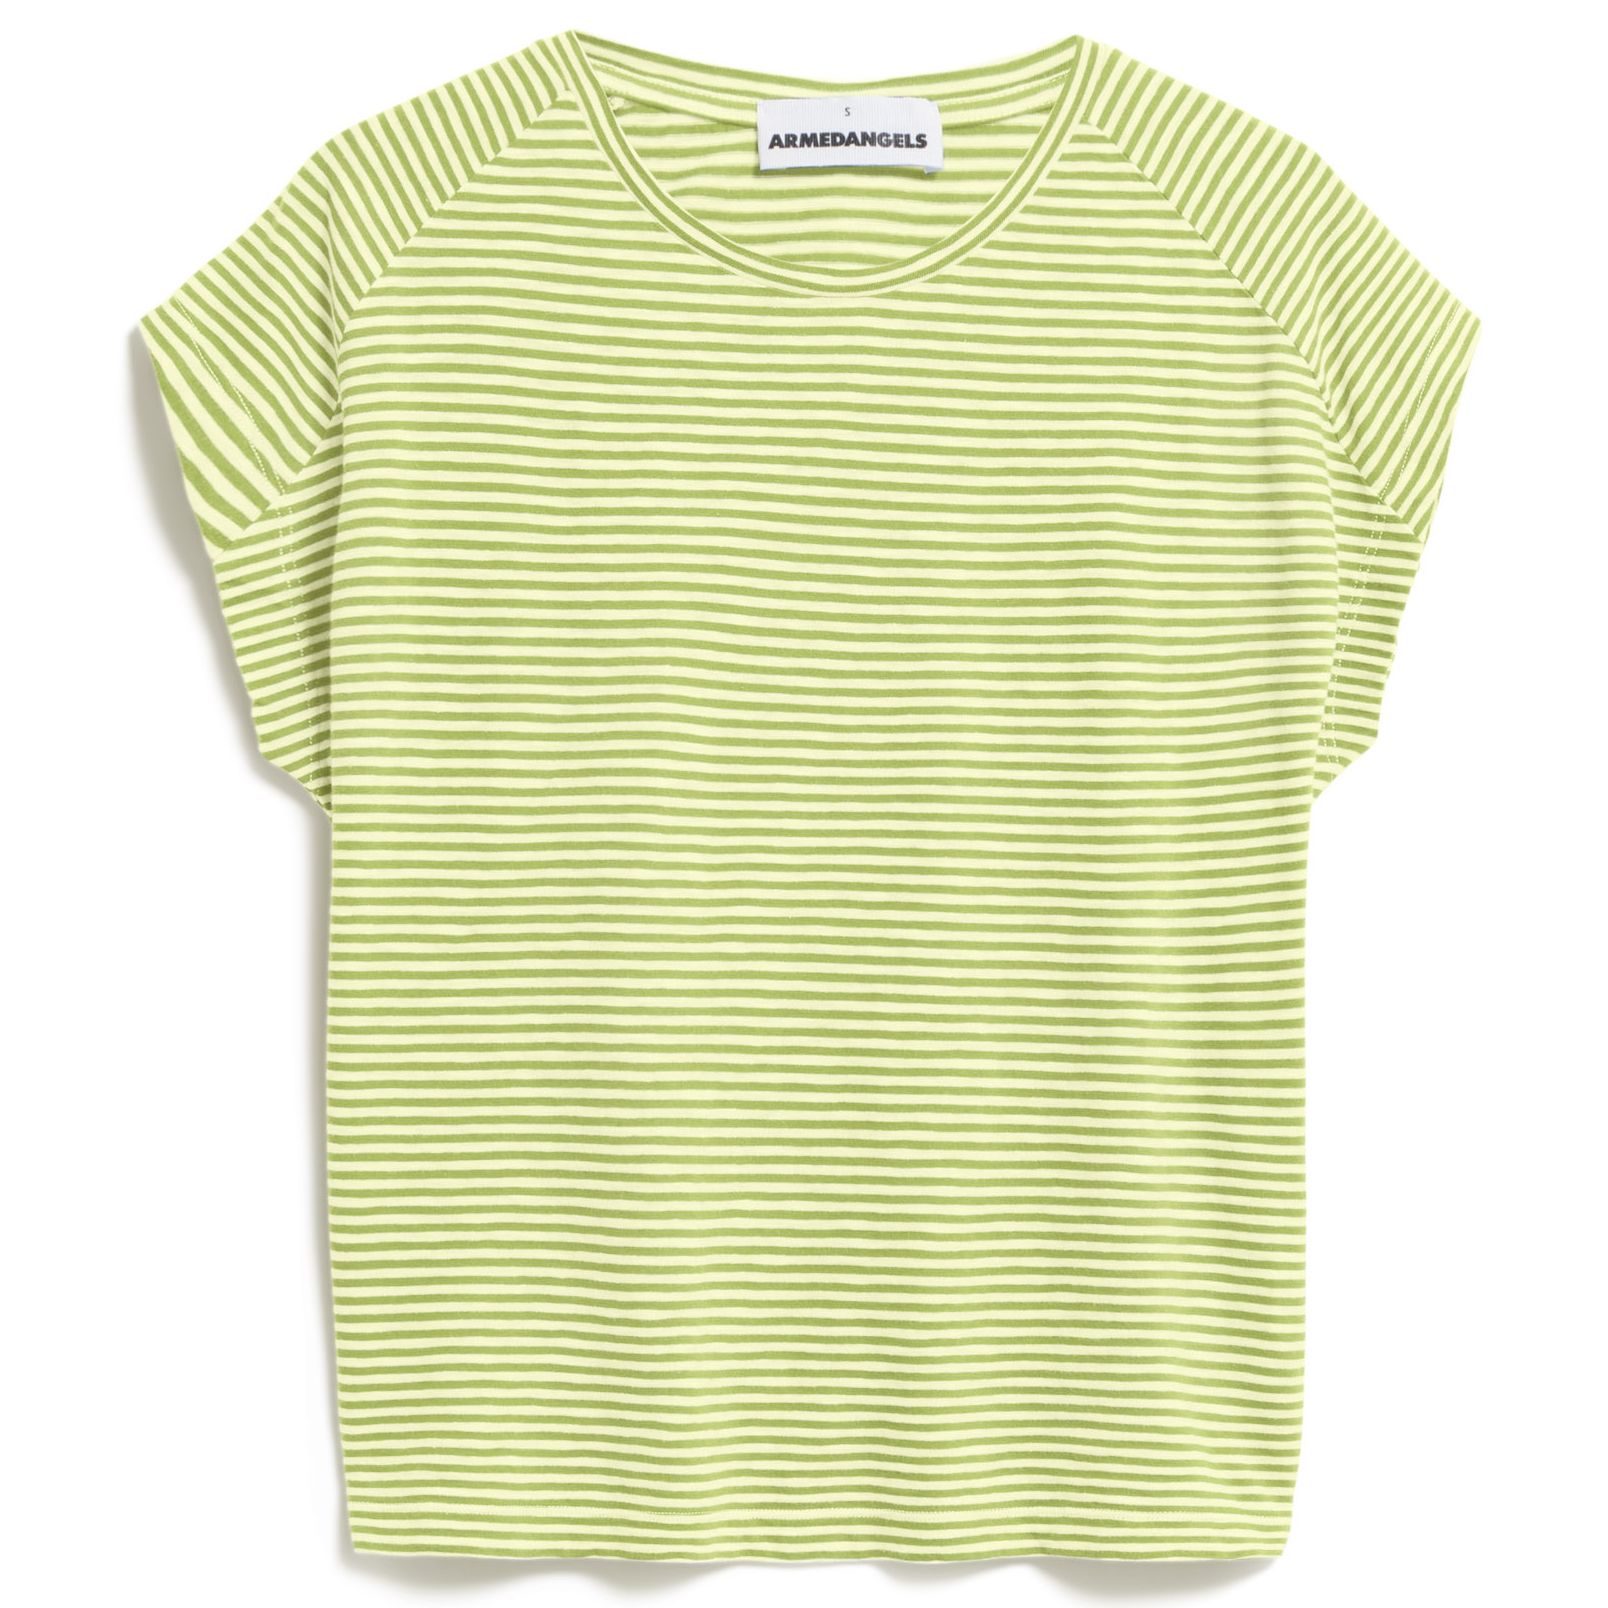 T-Shirt ONELIAA LOVELY STRIPES pastel green-armedangels yellow light